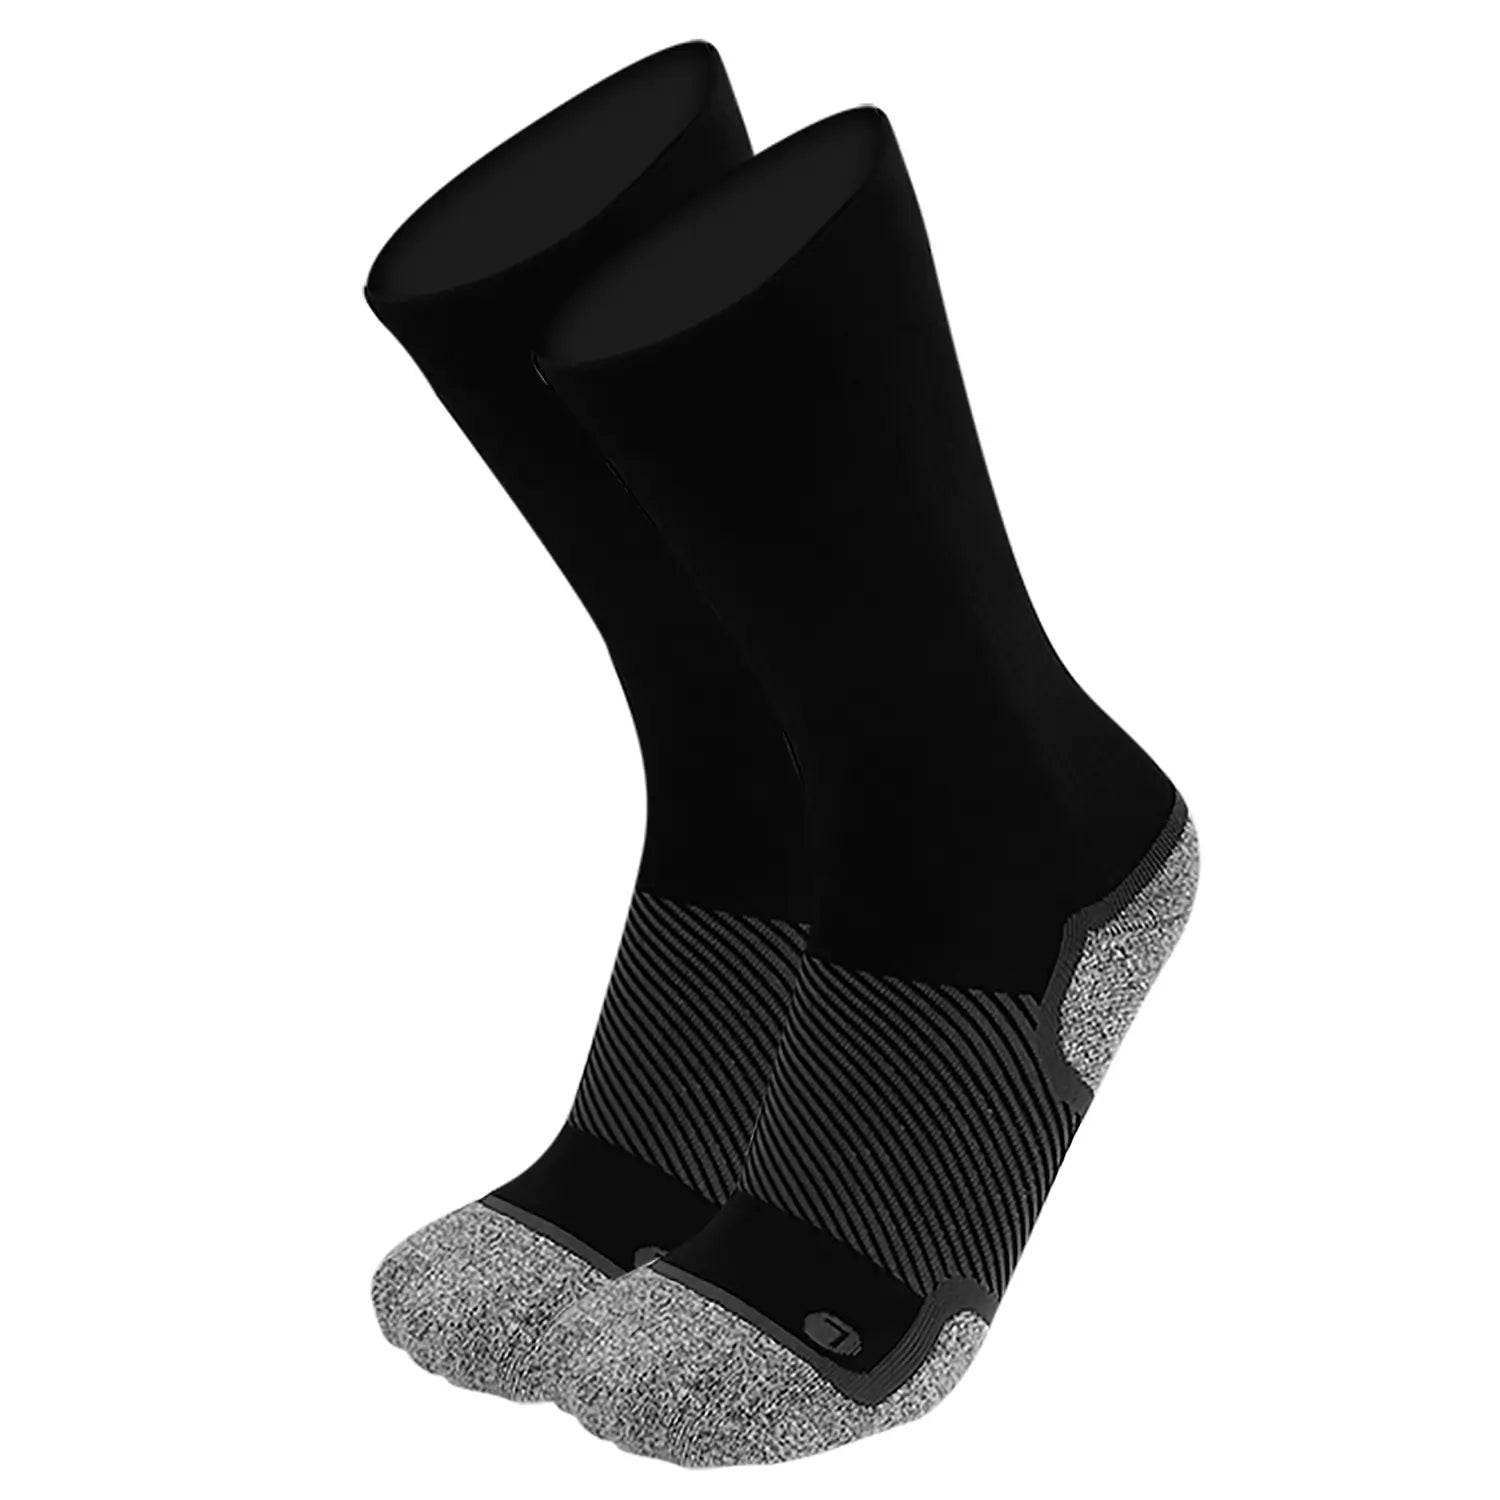 WP4 Wellness Performance Socks For Sensitive Feet - Crew